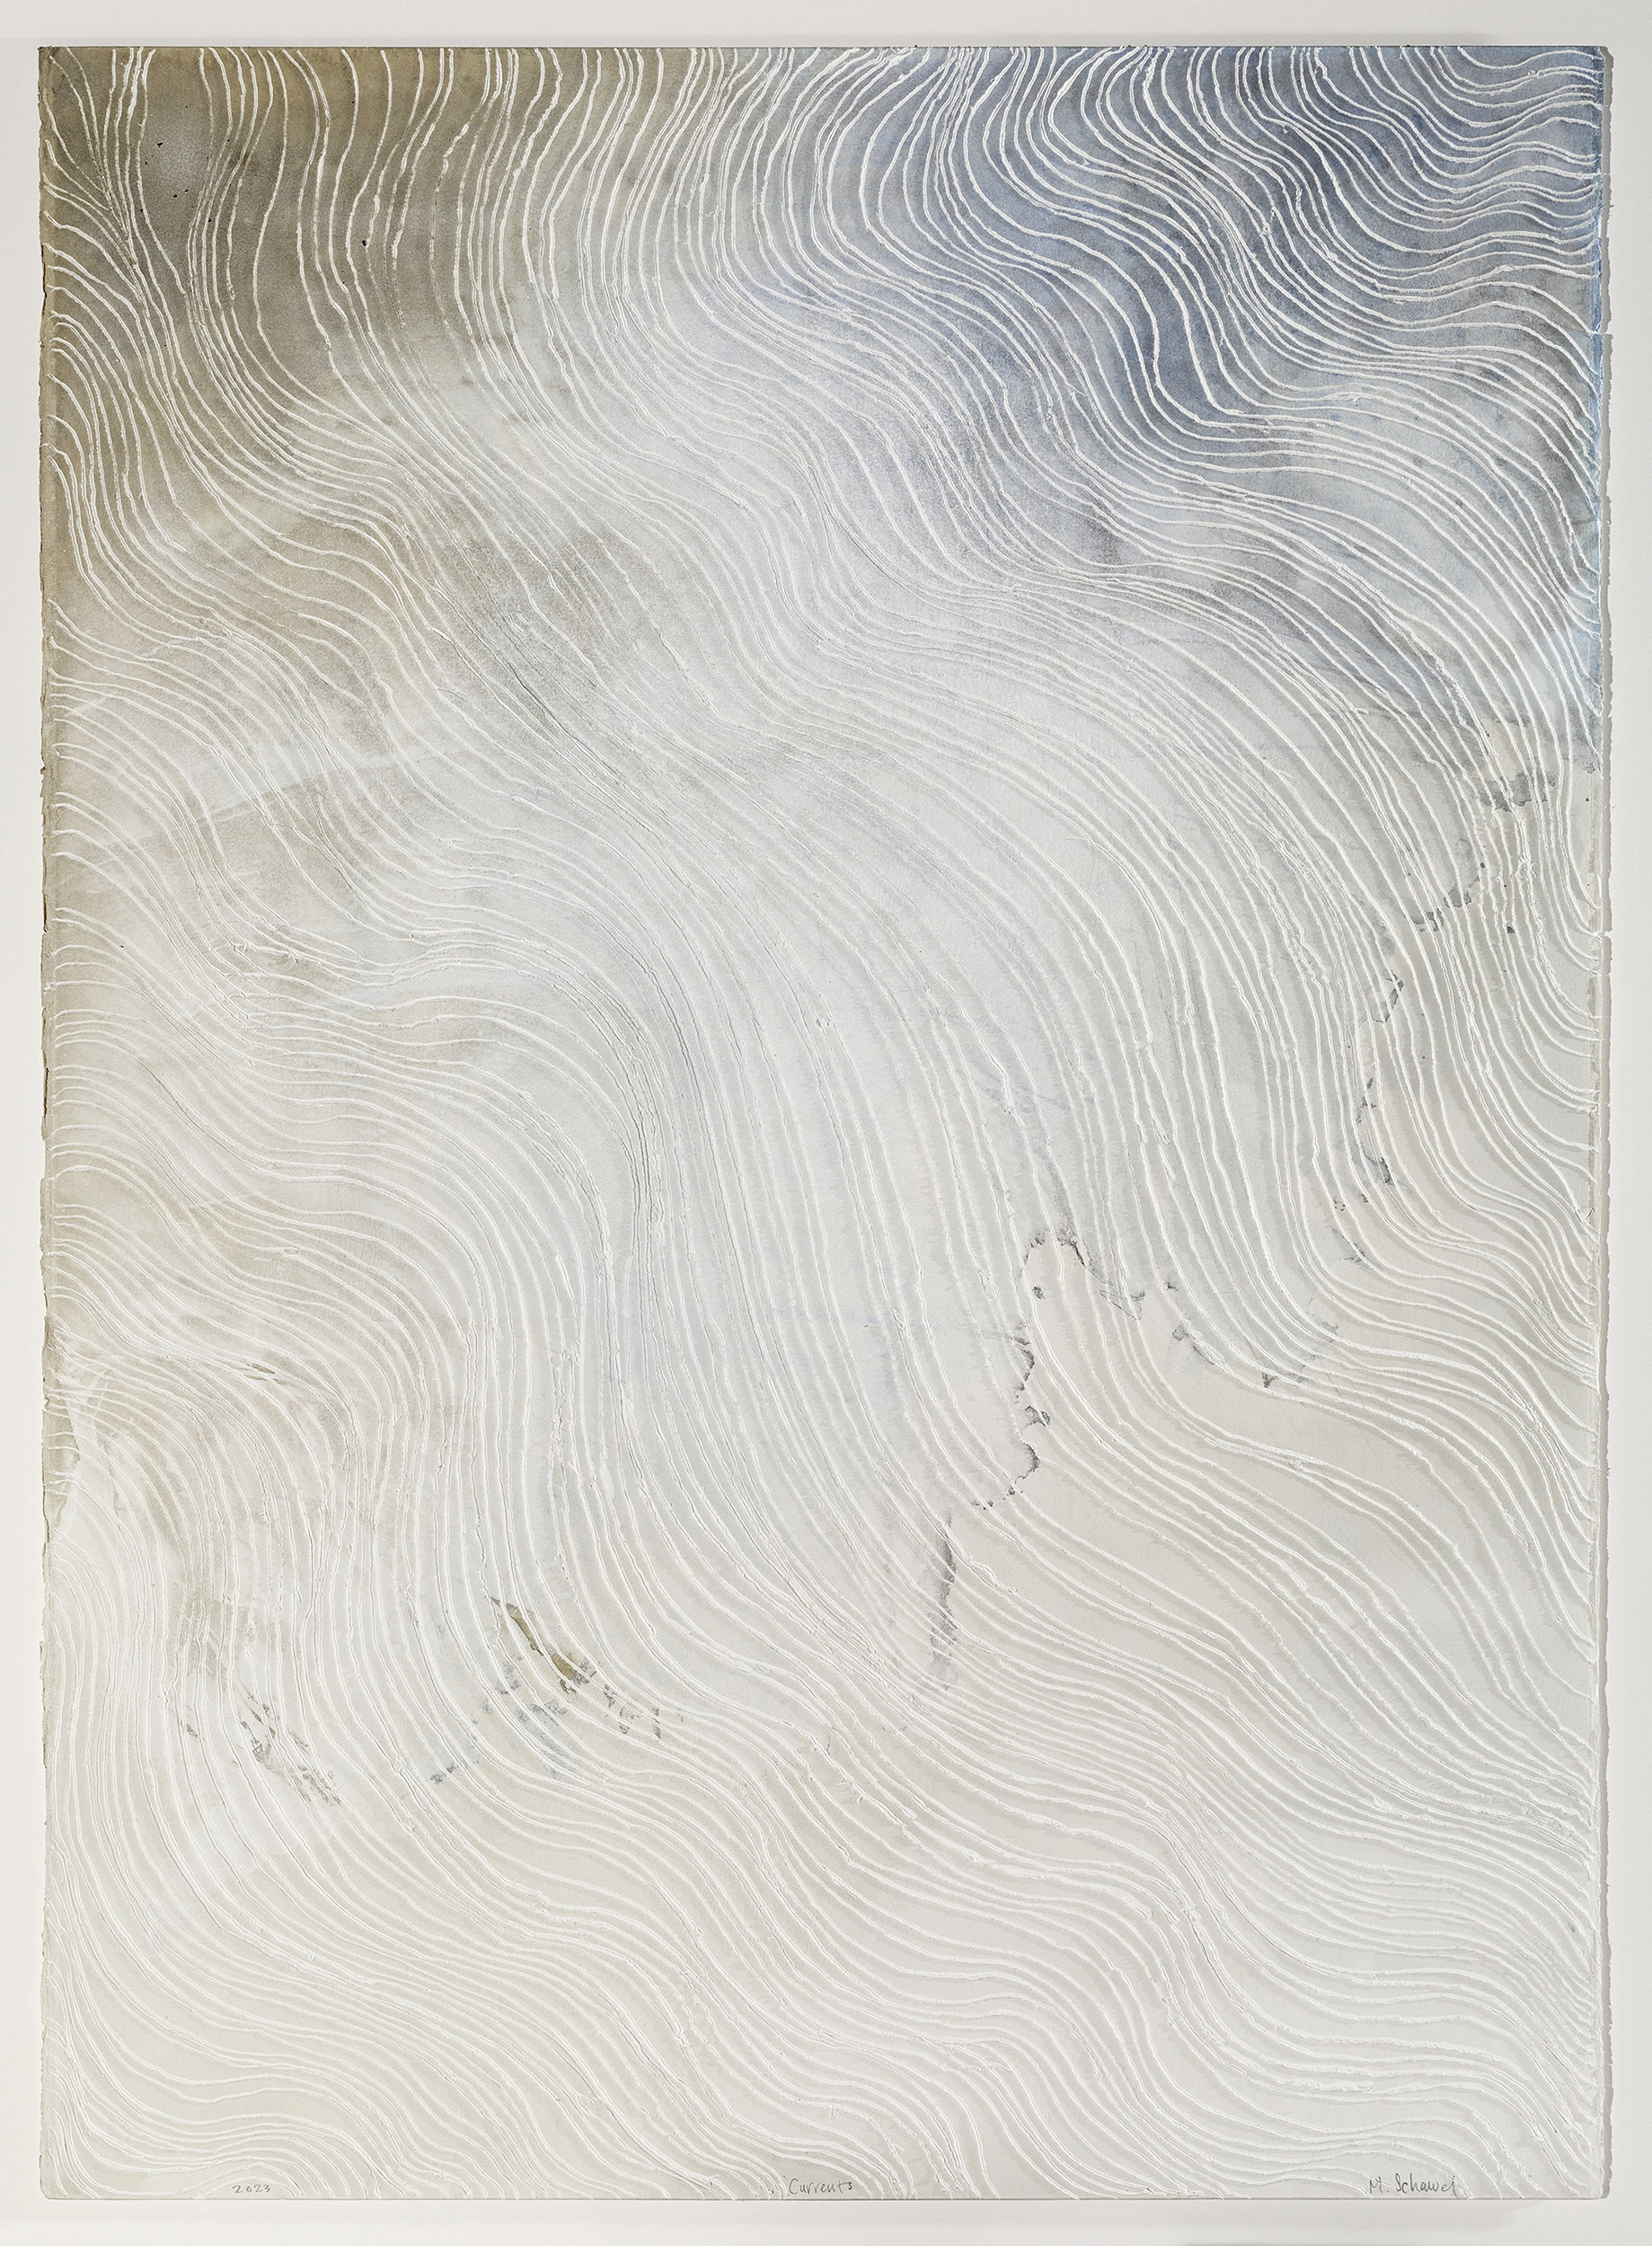 Melinda Schawel 'Currents' ink on perforated paper 105 x 75cm $6,600